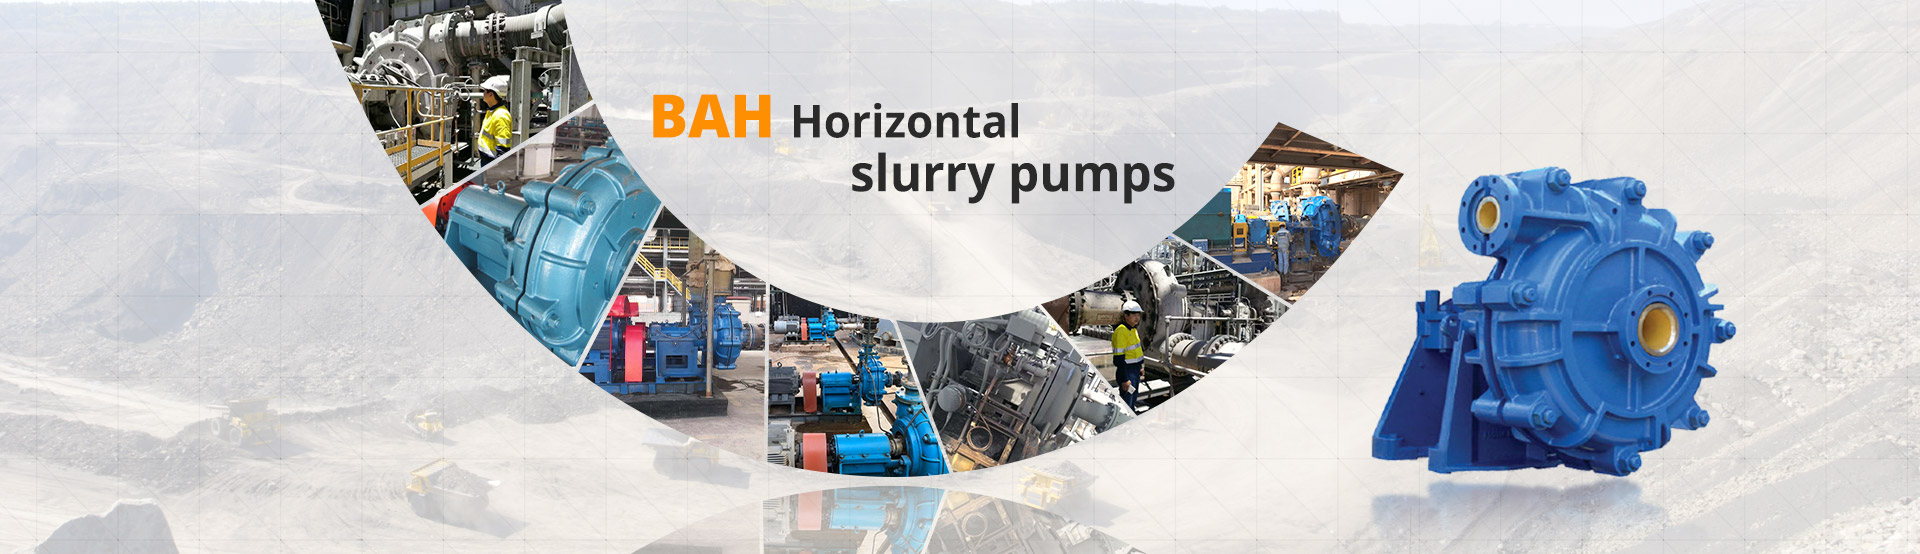 BAH Horizontal slurry pumps